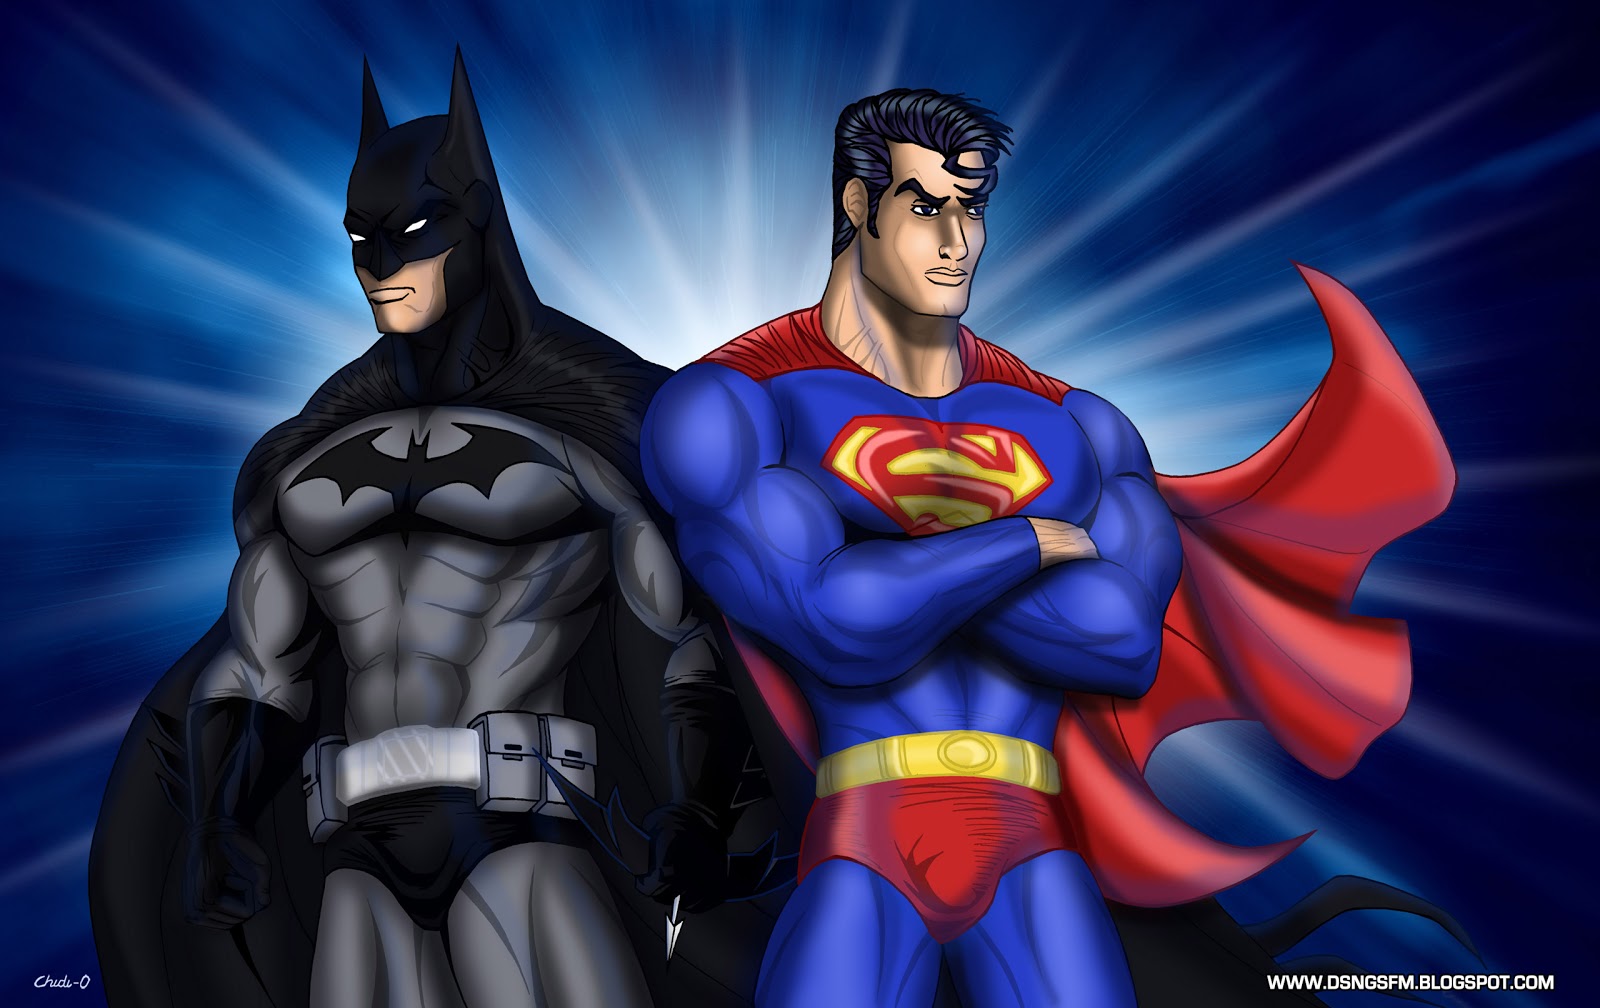 DSNGS SCI FI MEGAVERSE SUPERMAN BATMAN POSTERS   PLUS NEW ART BY